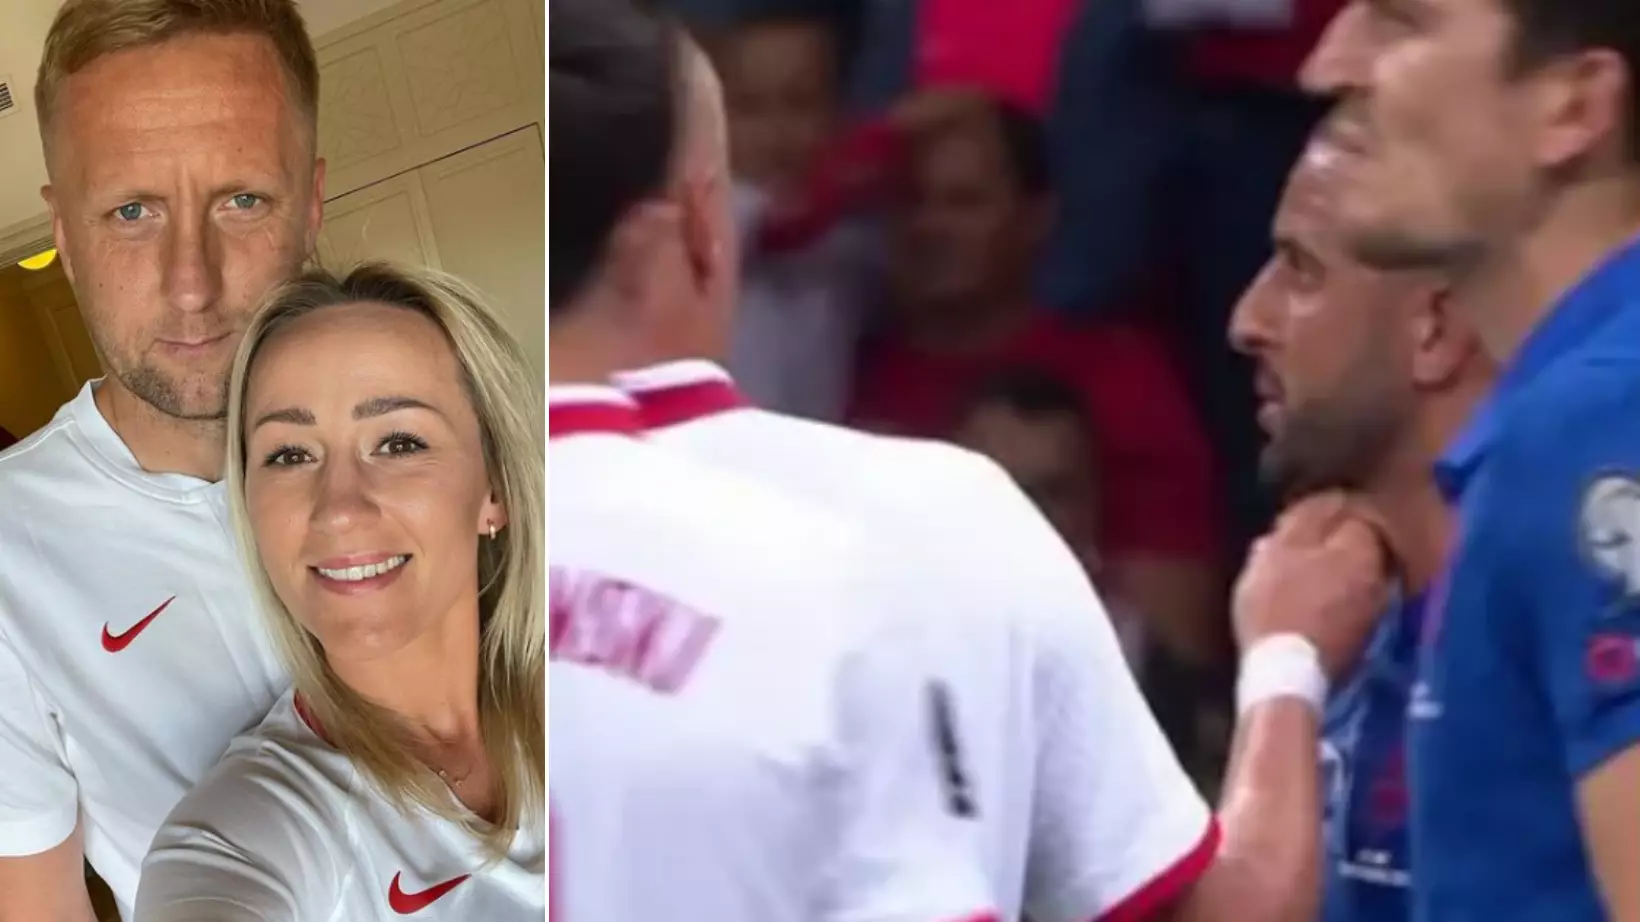 Kamil Glik's Wife Receives Sickening Death Threats On Social Media After England Game